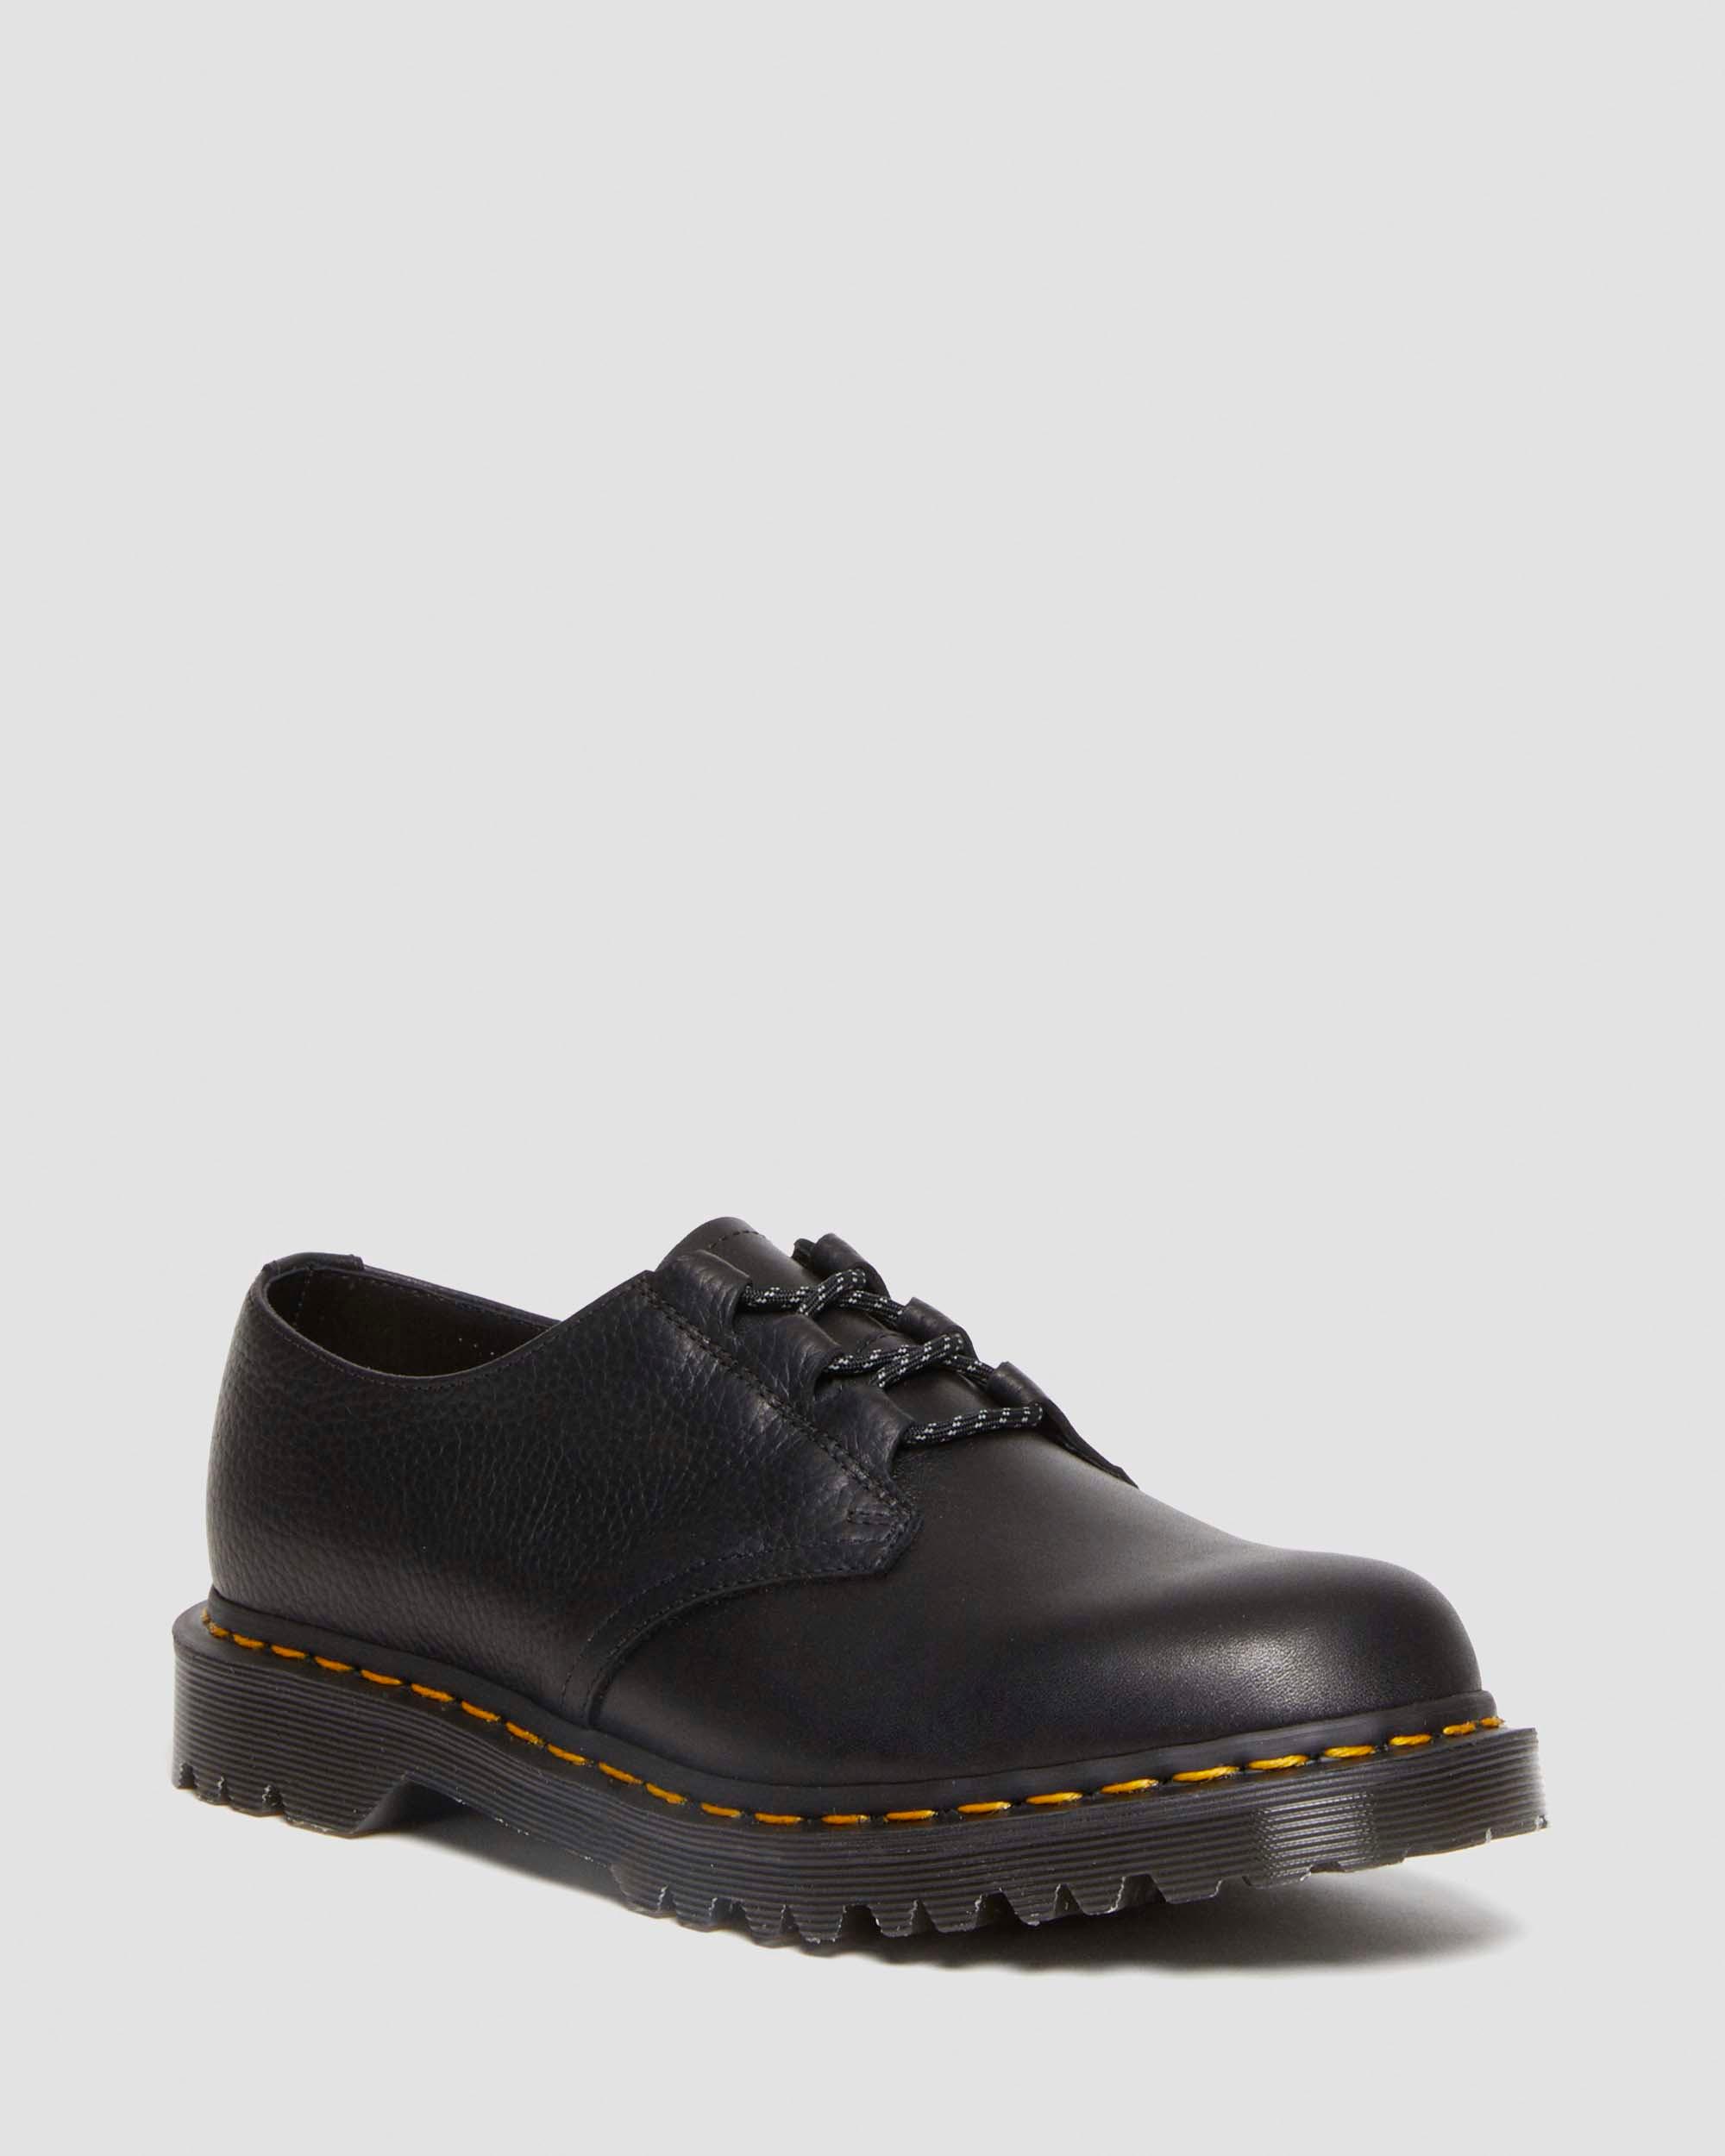 1461 Made in England Denver Leather Oxford Shoes, Olive | Dr 